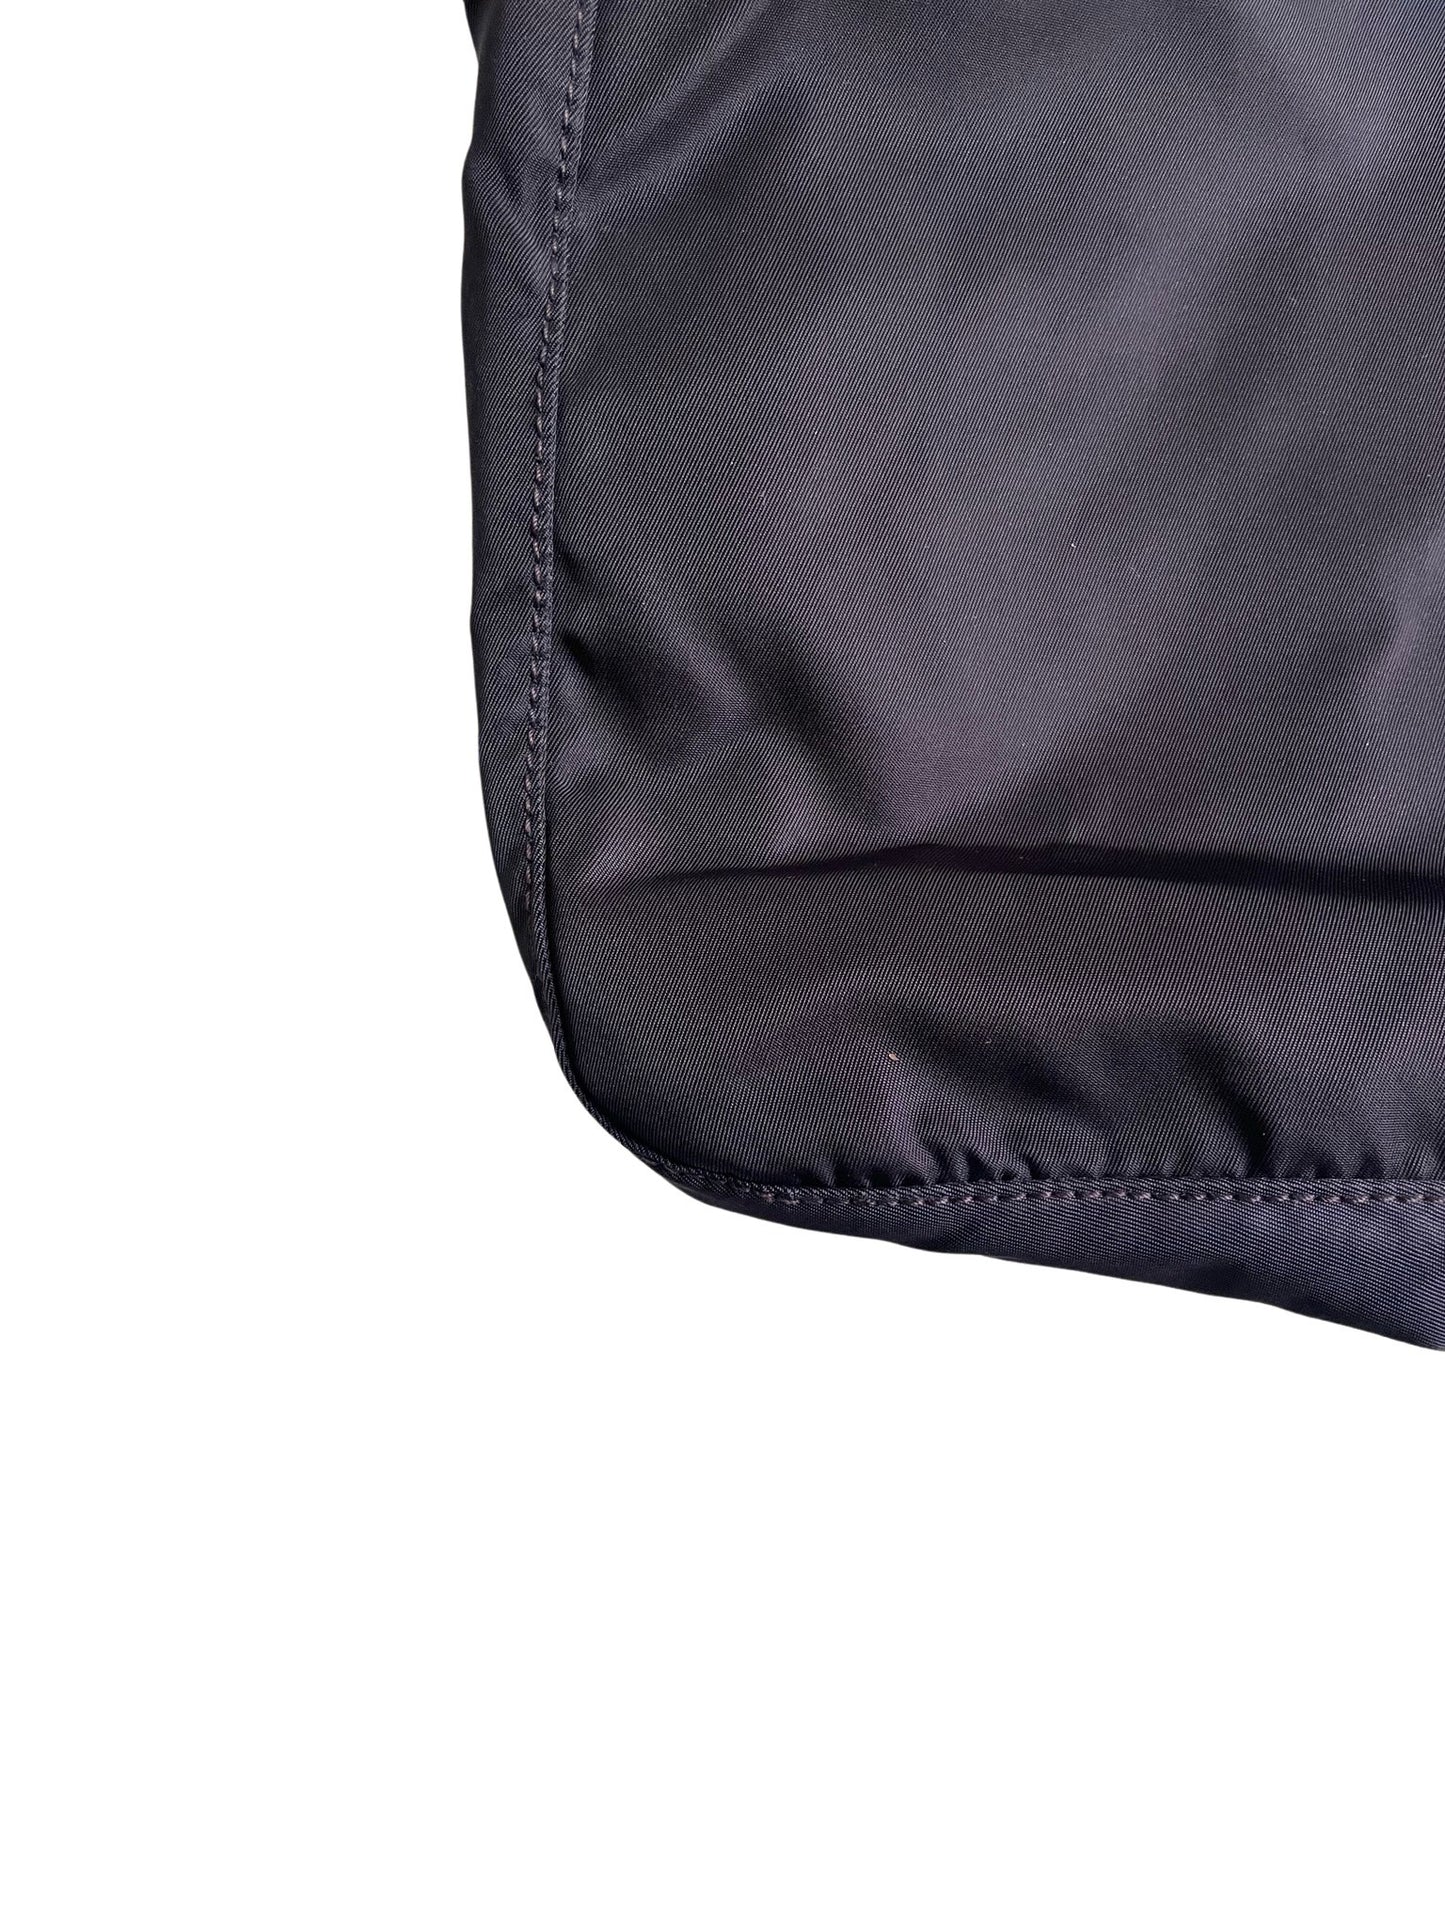 Prada Navy Nylon and Leather Crossbody bag